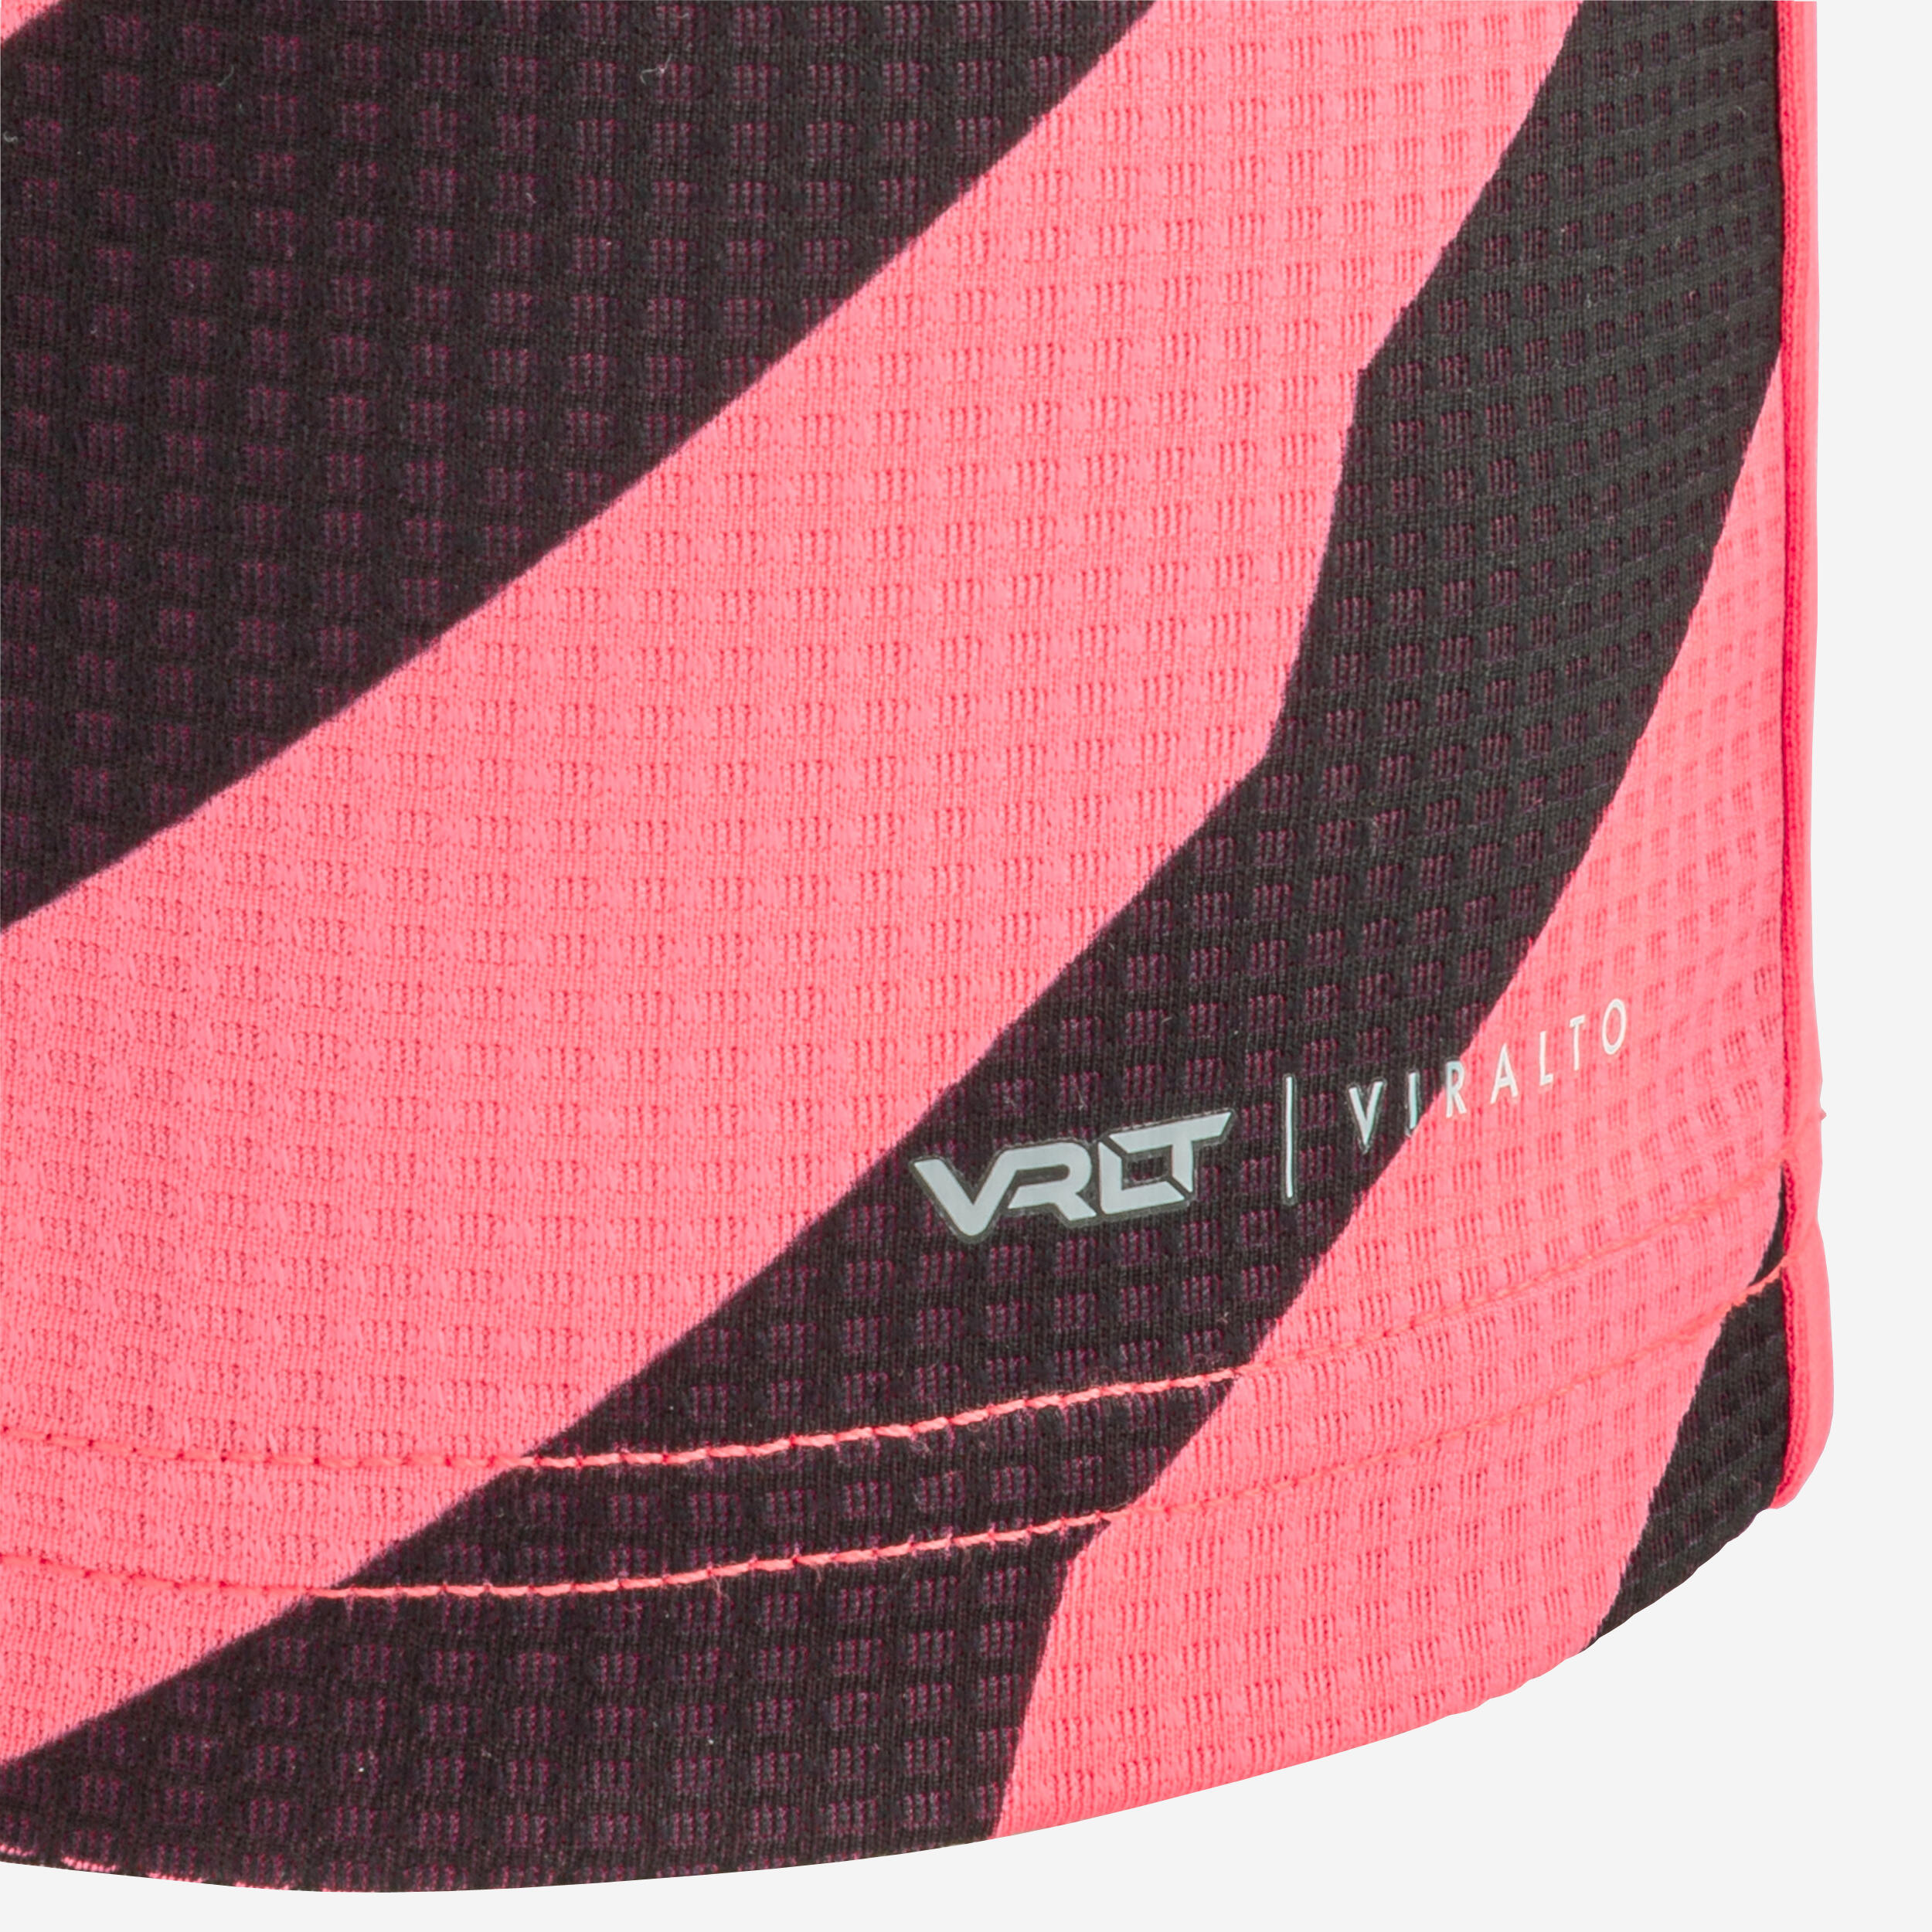 Kids' Football Shirt Viralto Axton - Pink & Black 4/11